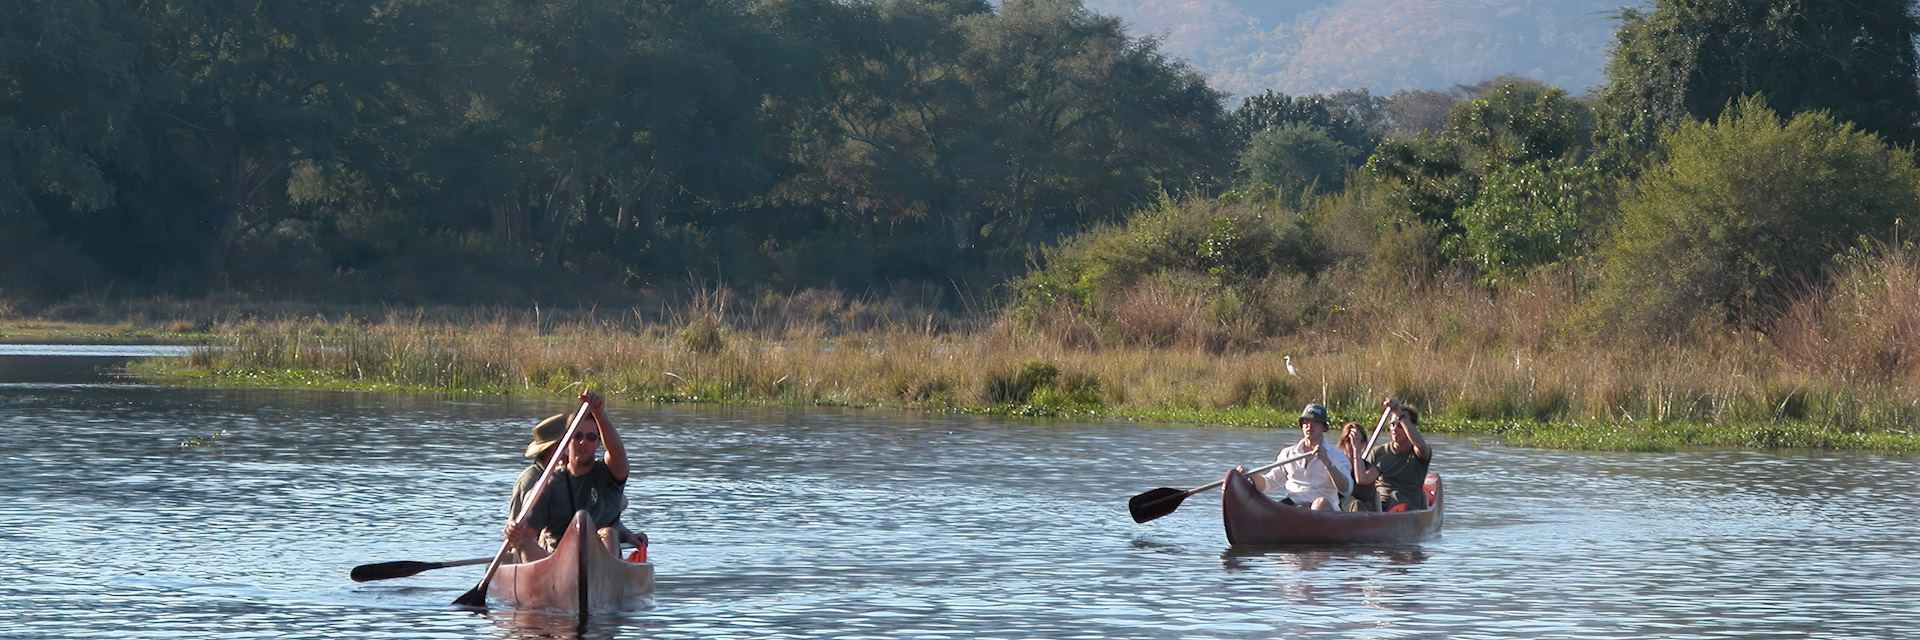 Canoeing in the Lower Zambezi